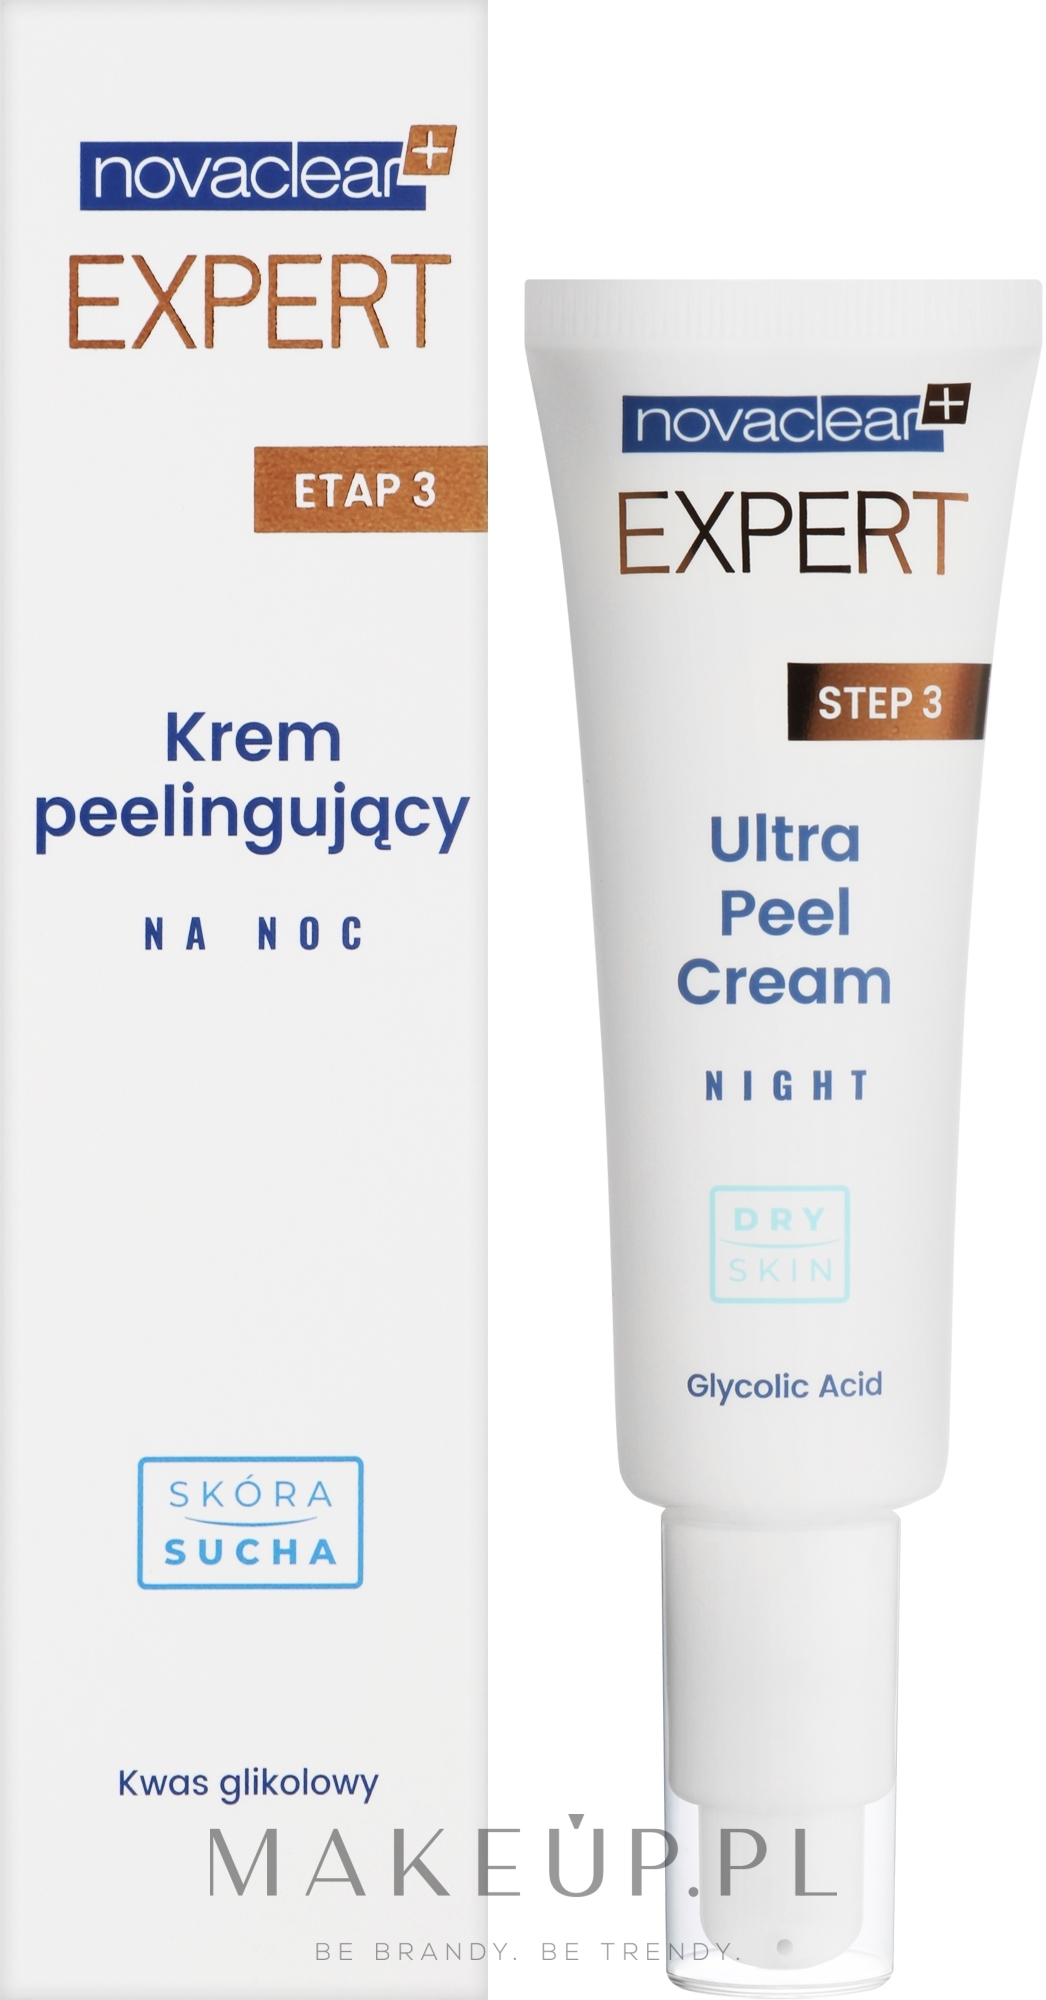 Krem peelingujący do skóry suchej, na noc - Novaclear Expert Step 3 Ultra Pell Cream Night Dry Skin — Zdjęcie 50 ml